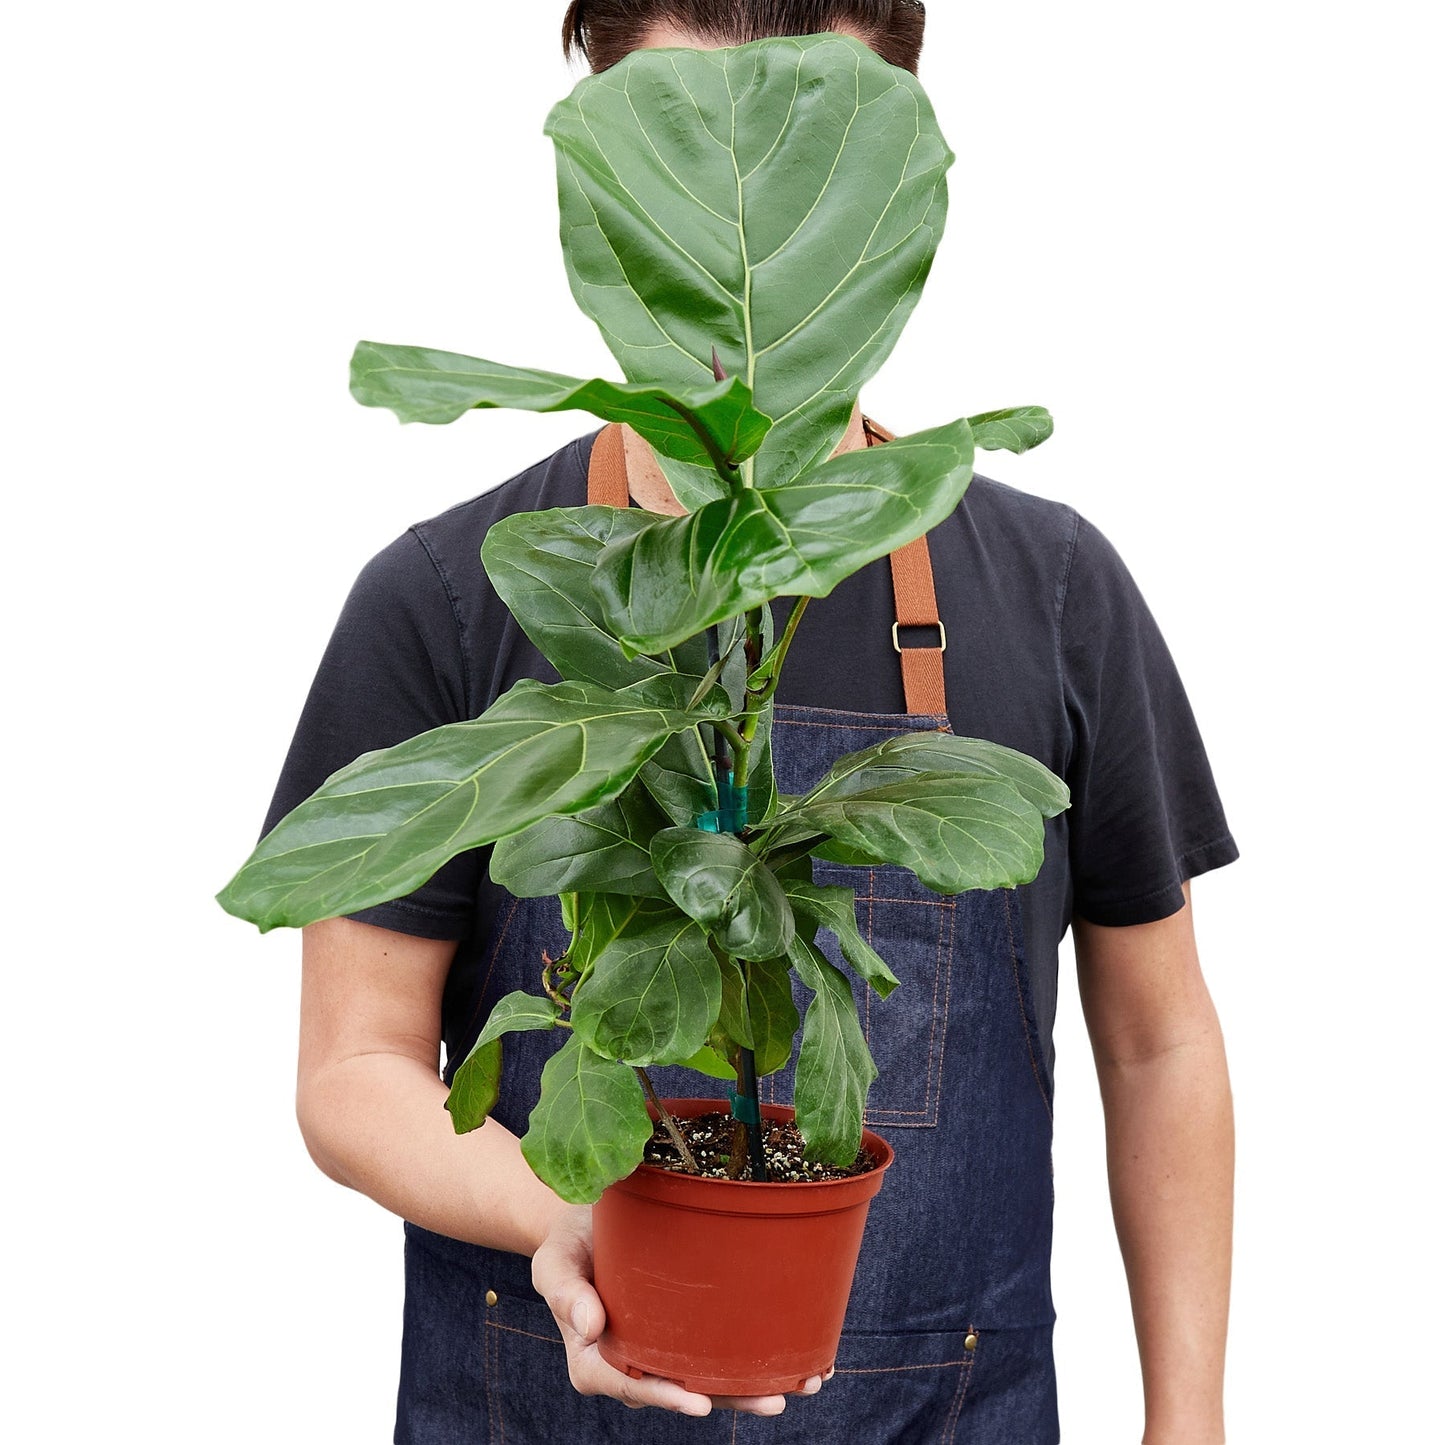 Ficus Lyrata 'Fiddle Leaf Fig' - 6" Pot - NURSERY POT ONLY